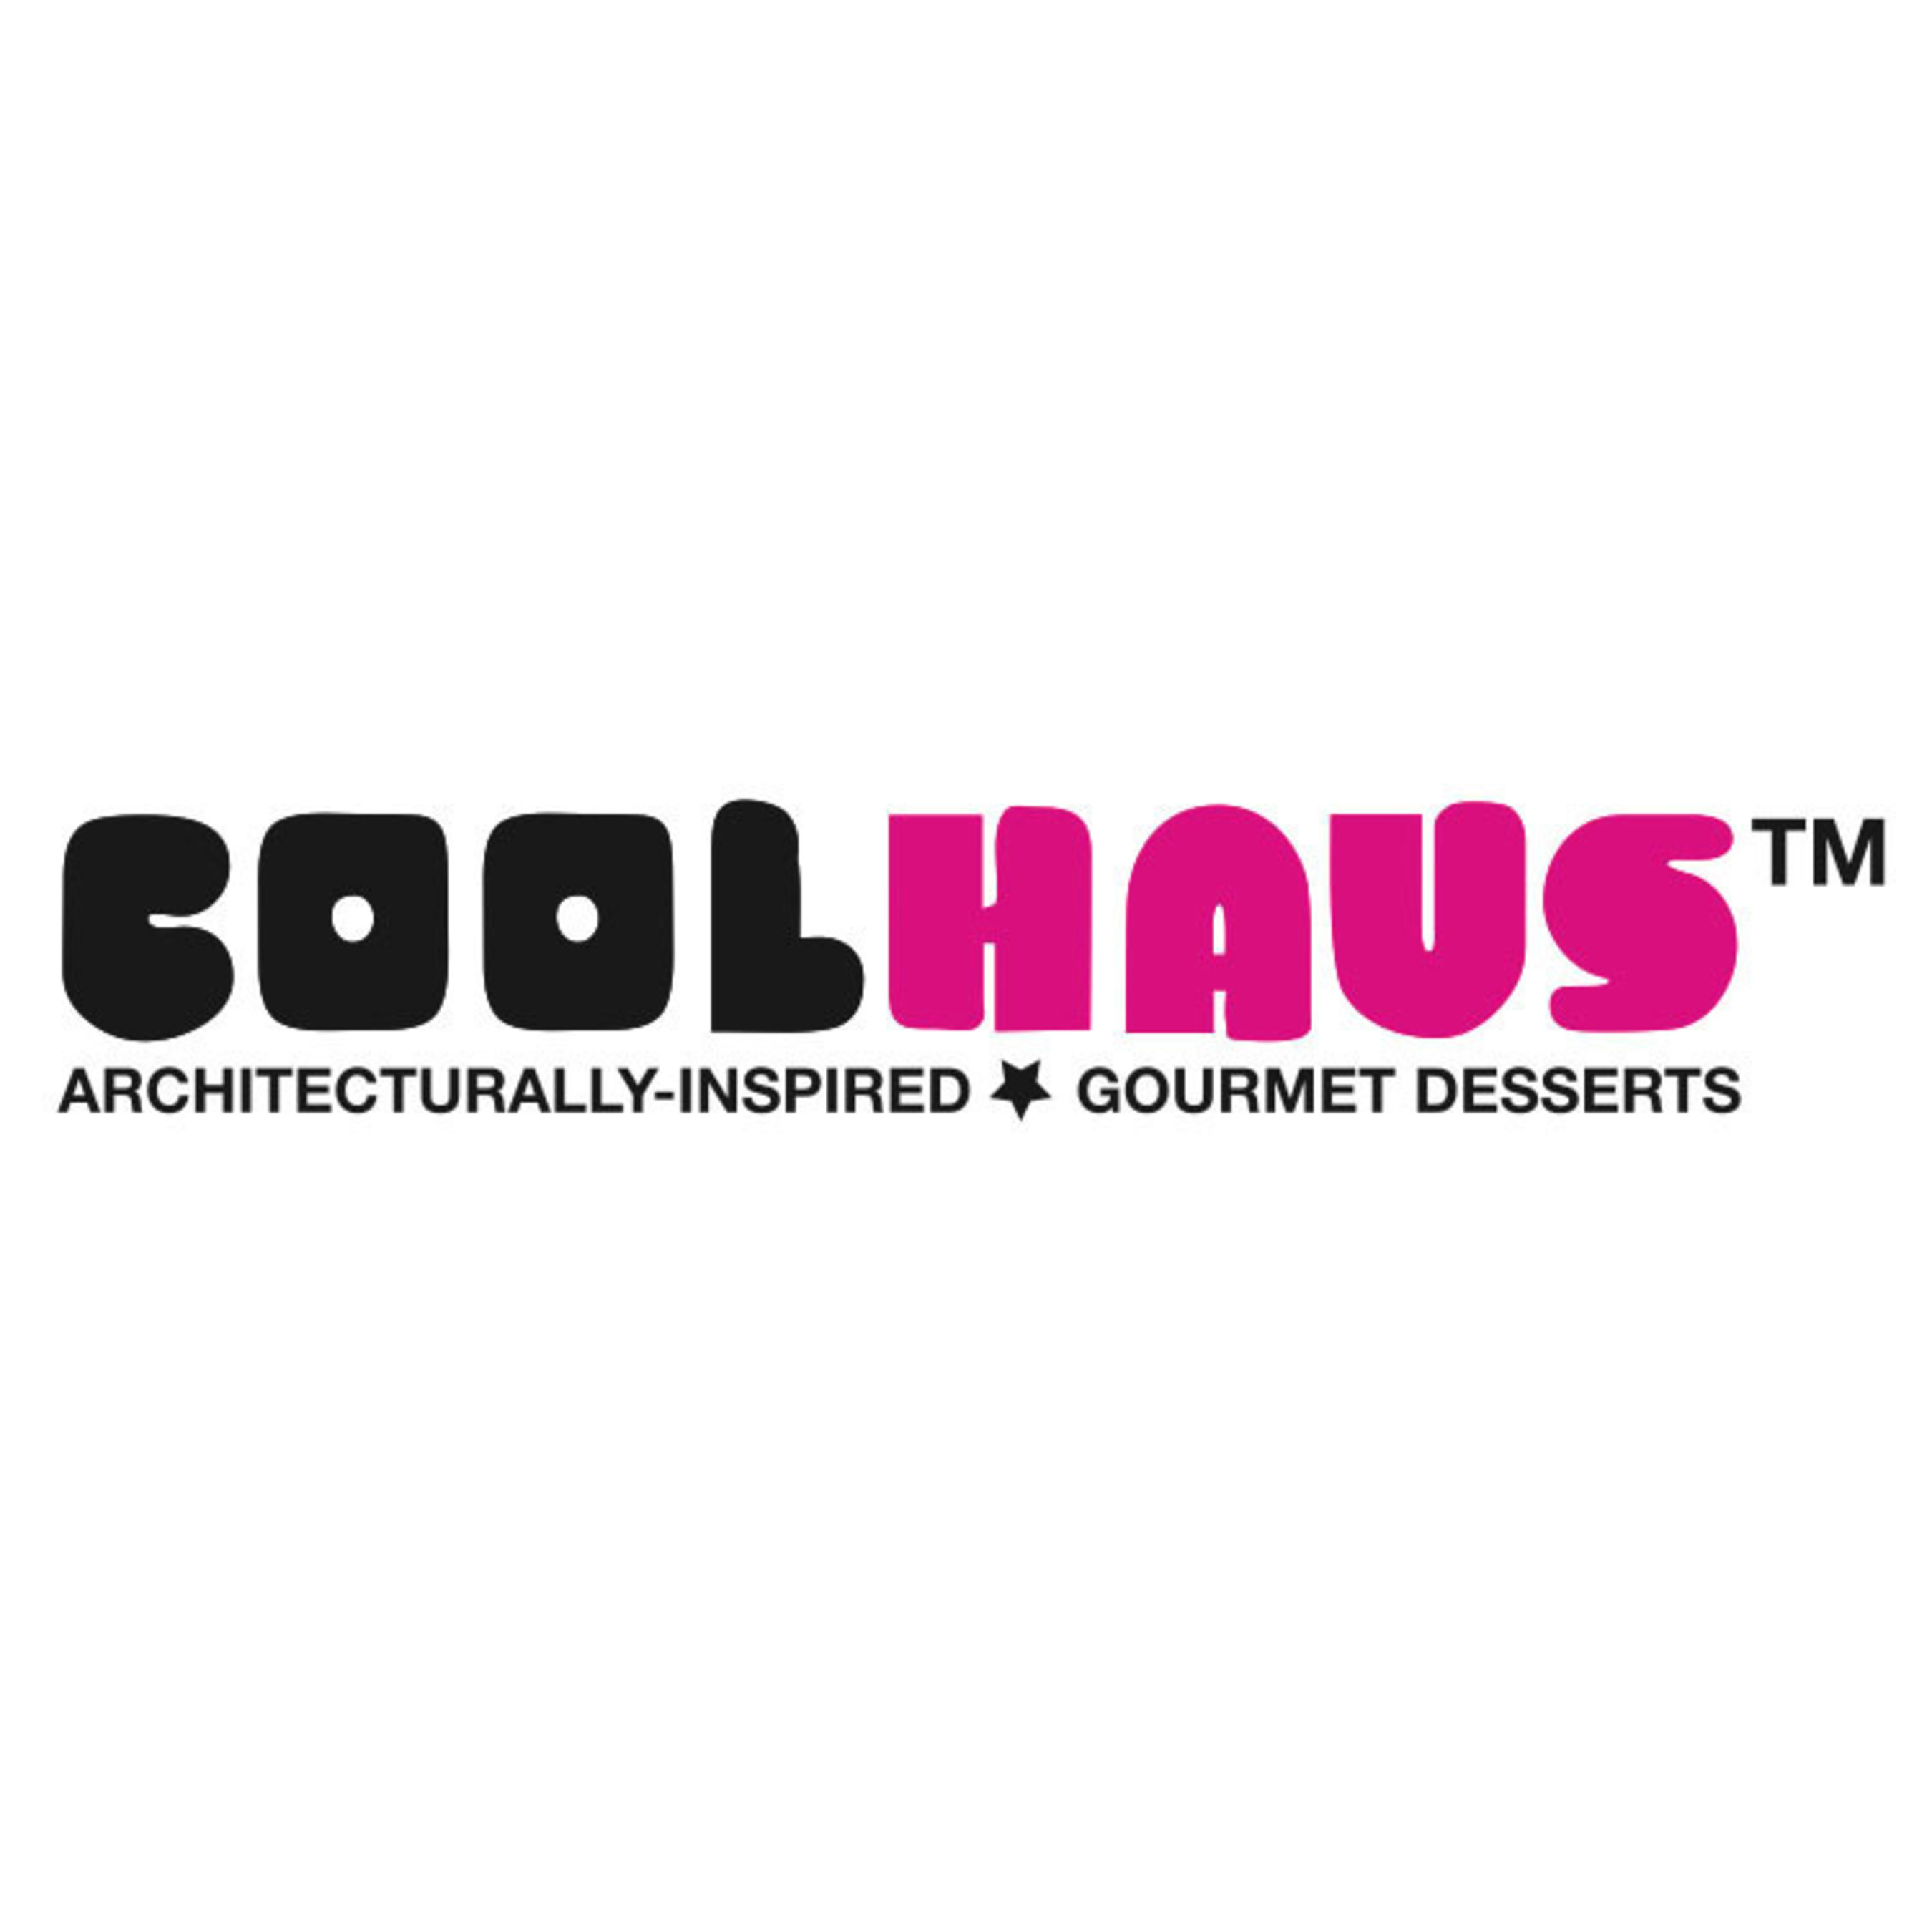 Coolhaus logo. (PRNewsFoto/Coolhaus) (PRNewsFoto/COOLHAUS)